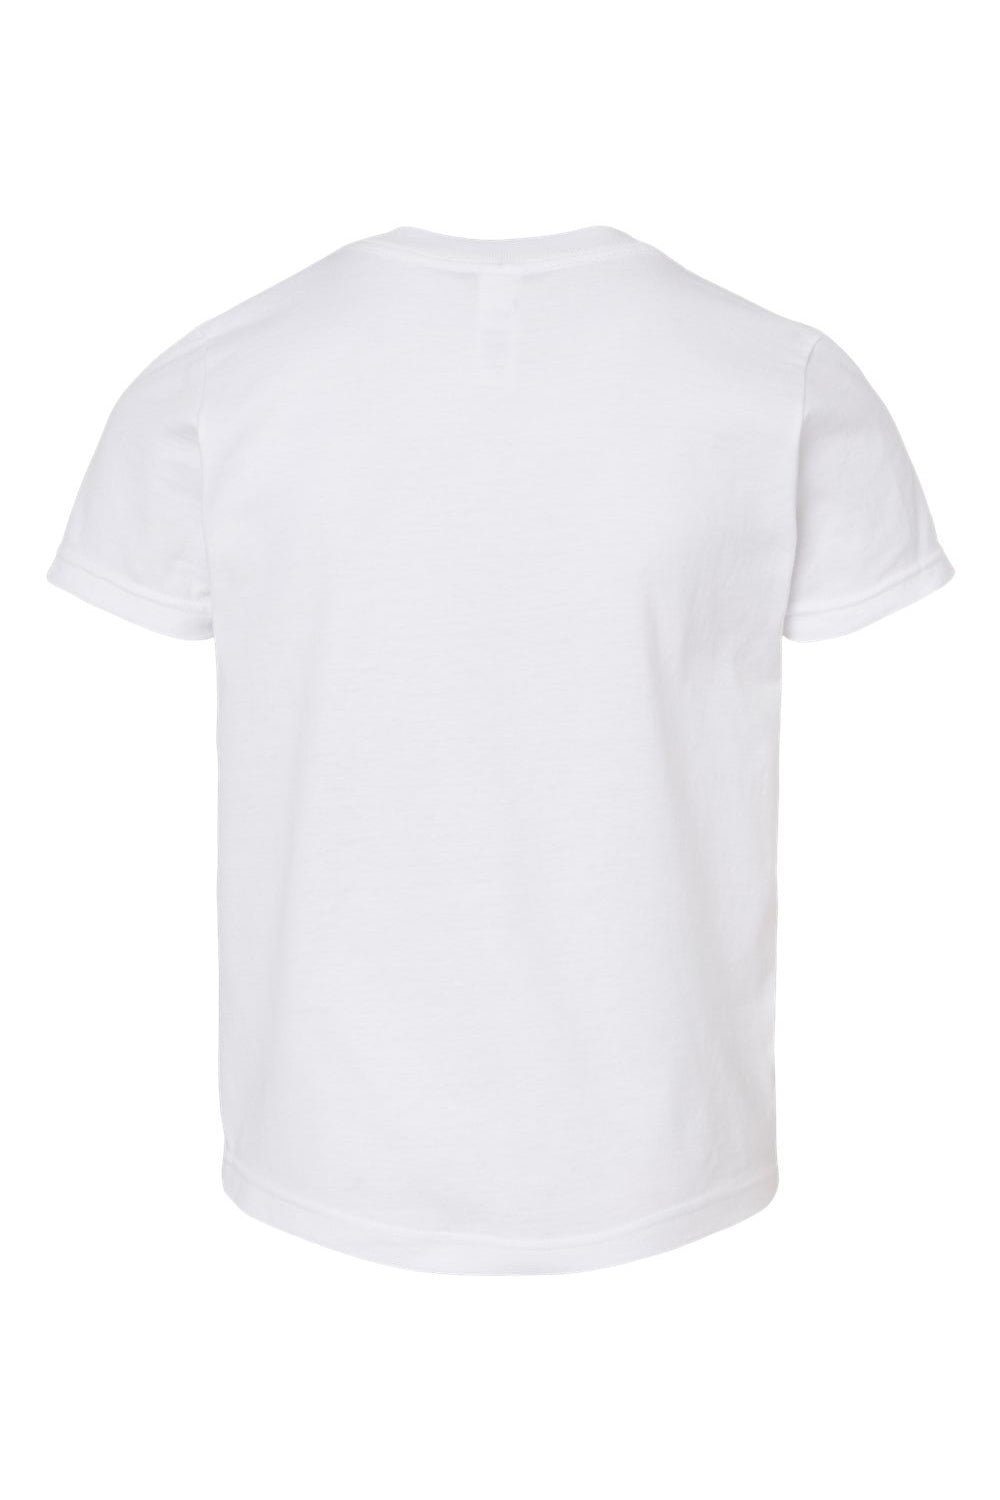 Tultex 235 Youth Fine Jersey Short Sleeve Crewneck T-Shirt White Flat Back